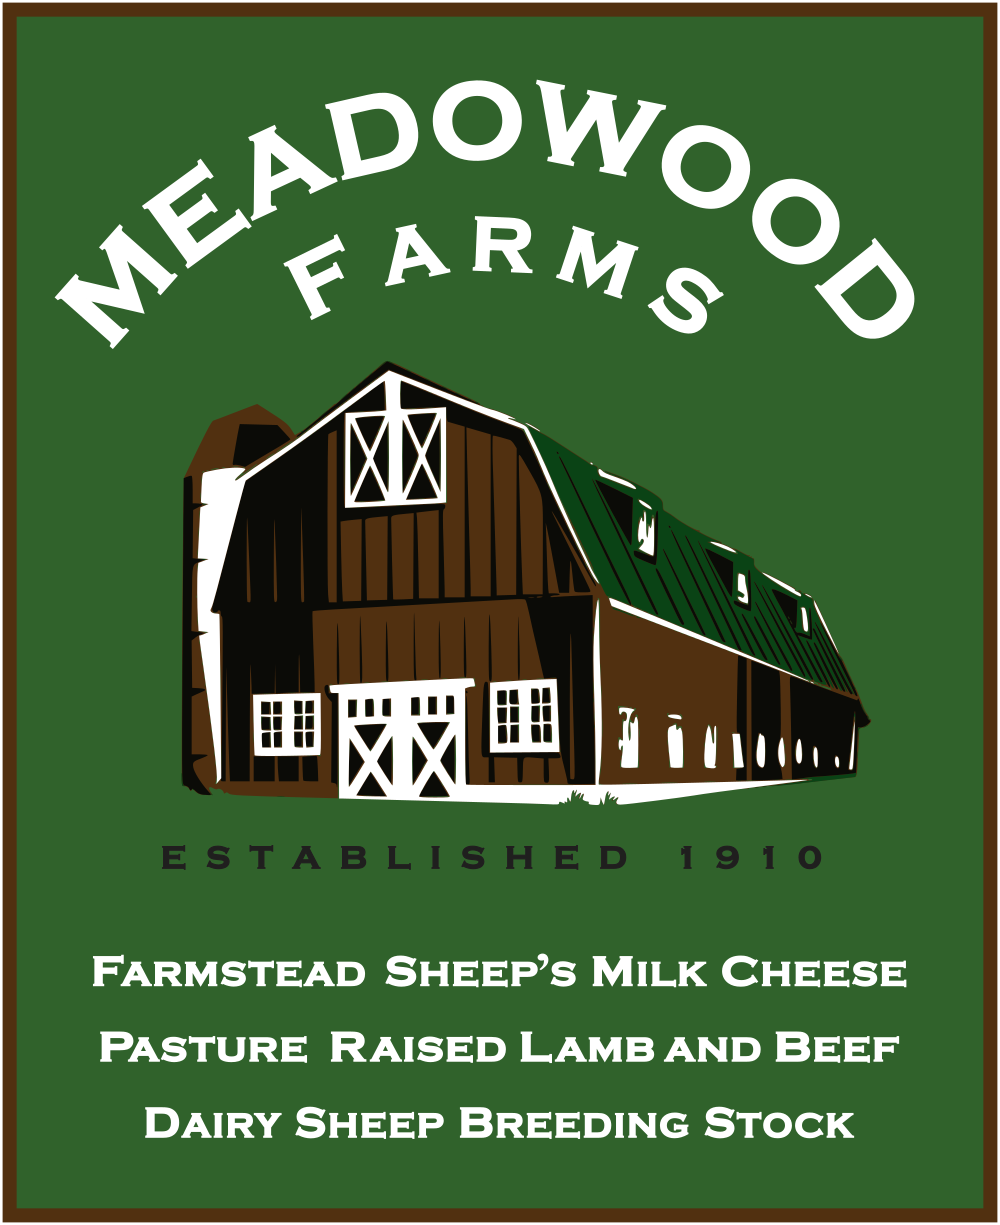 Meadowood Farms